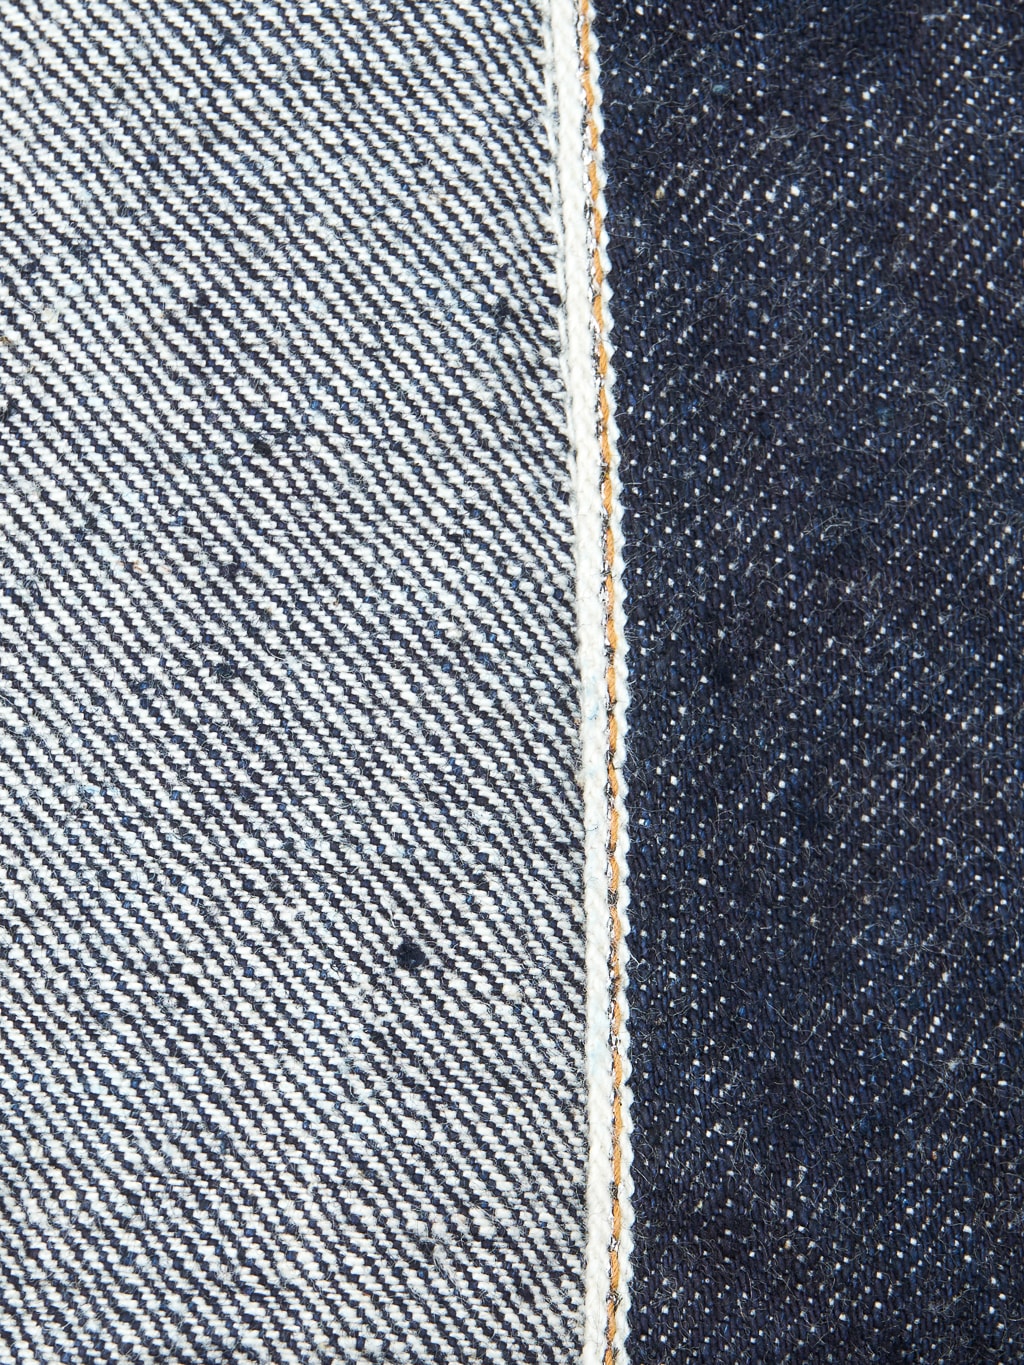 Samurai Jeans S5512PX 15oz Otokogi Denim Type 1 Jacket selvedge